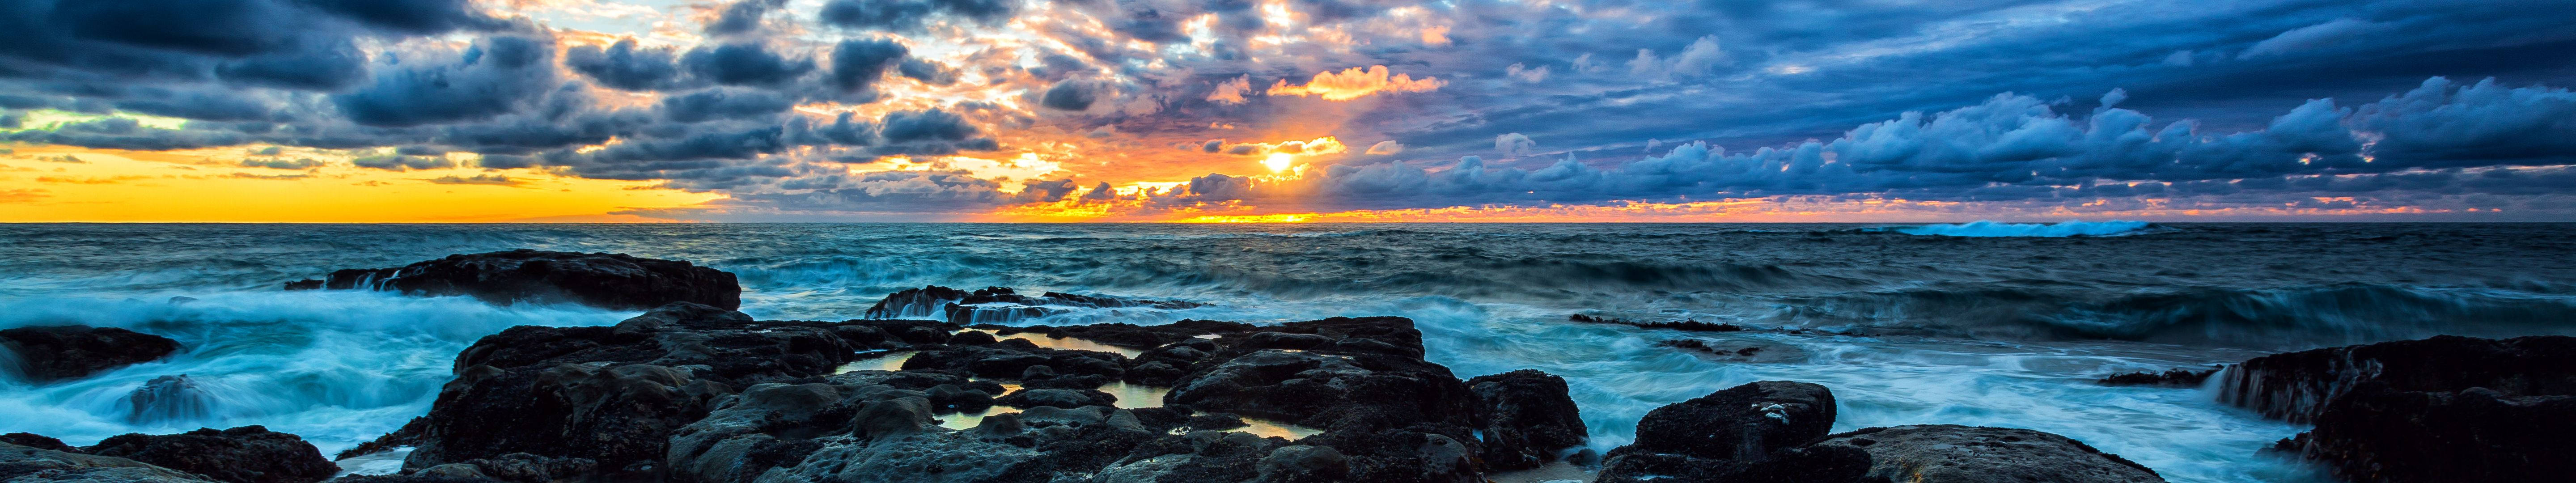 Watch the sunrise from a rocky beach Wallpaper